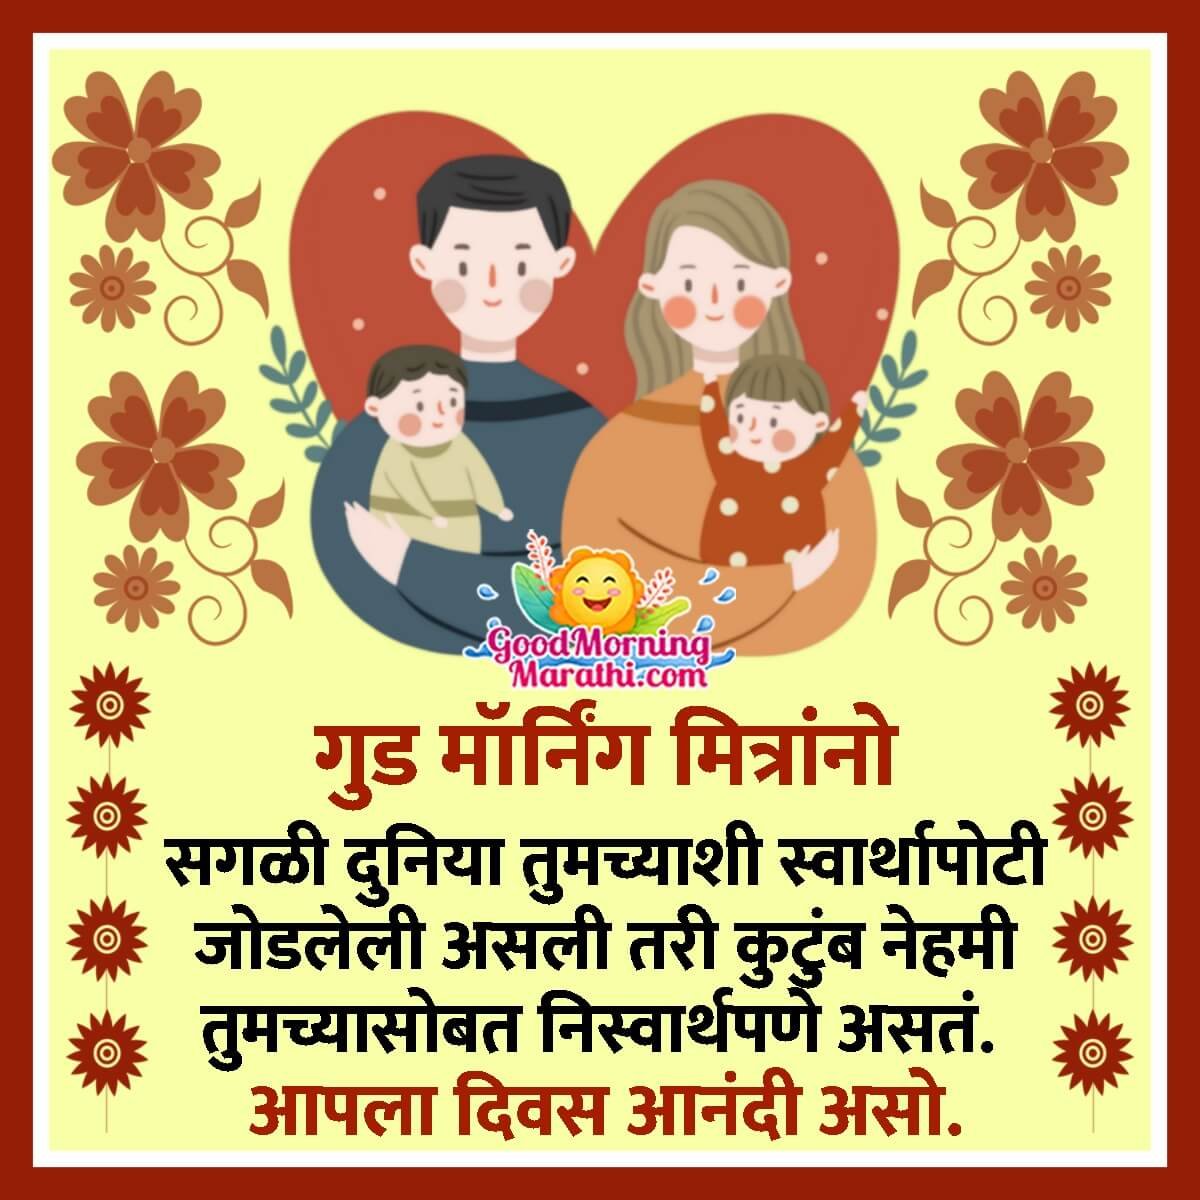 Good Morning Family Quotes in Marathi - Good Morning Wishes & Images In  Marathi